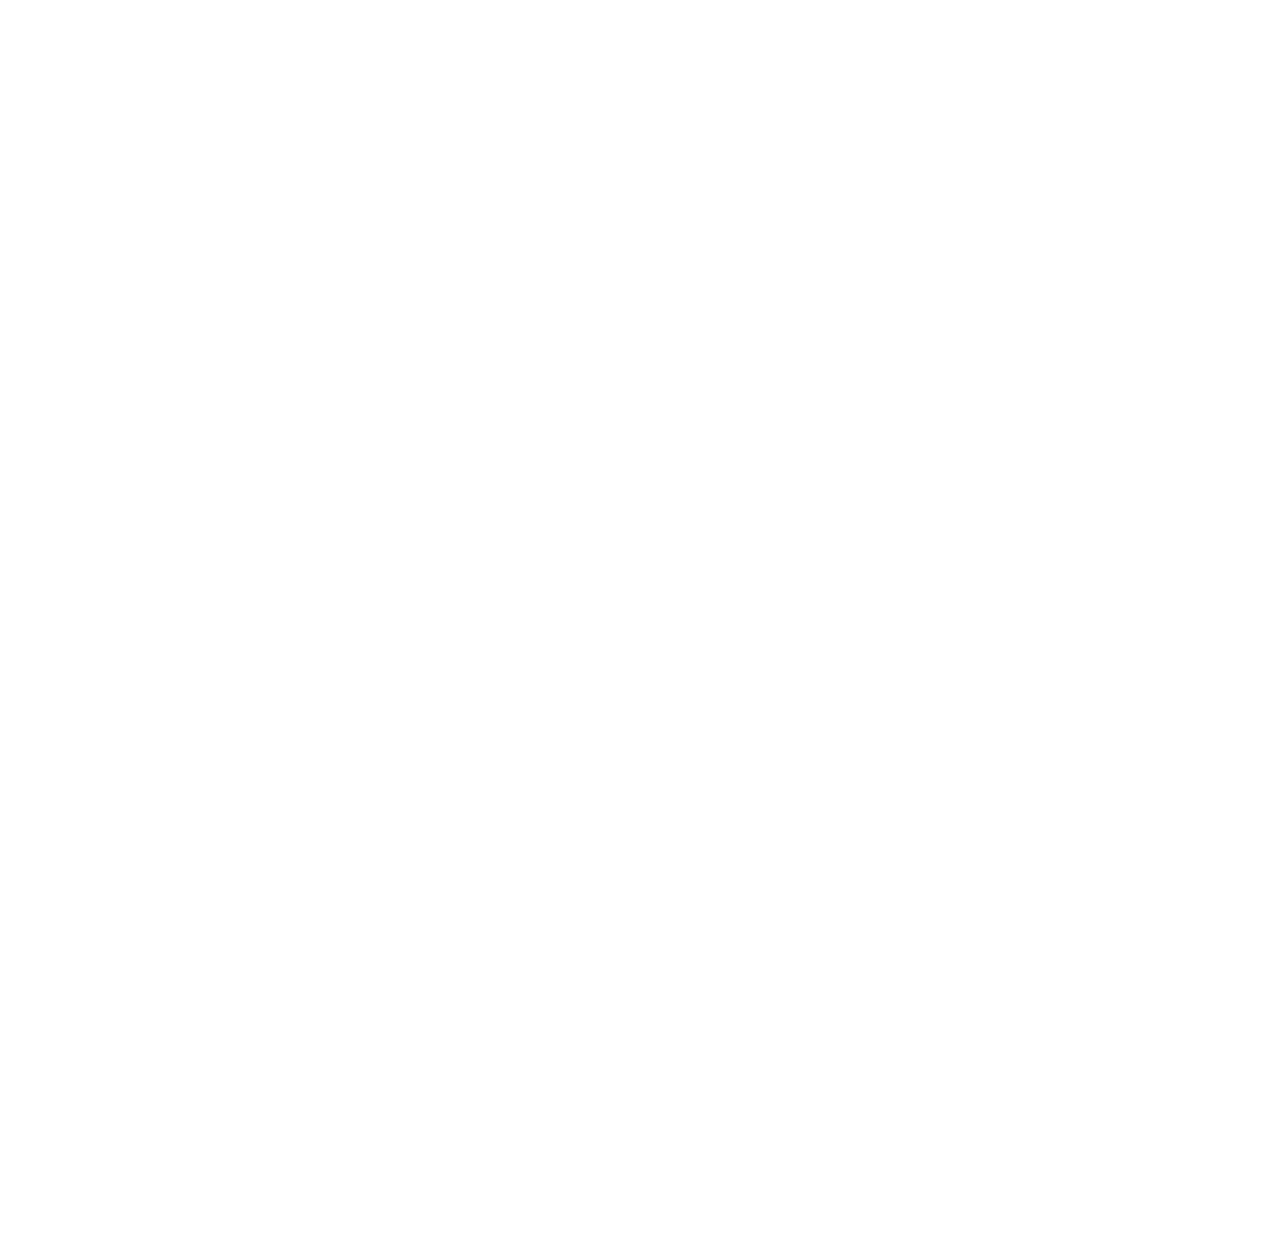 STEM seven